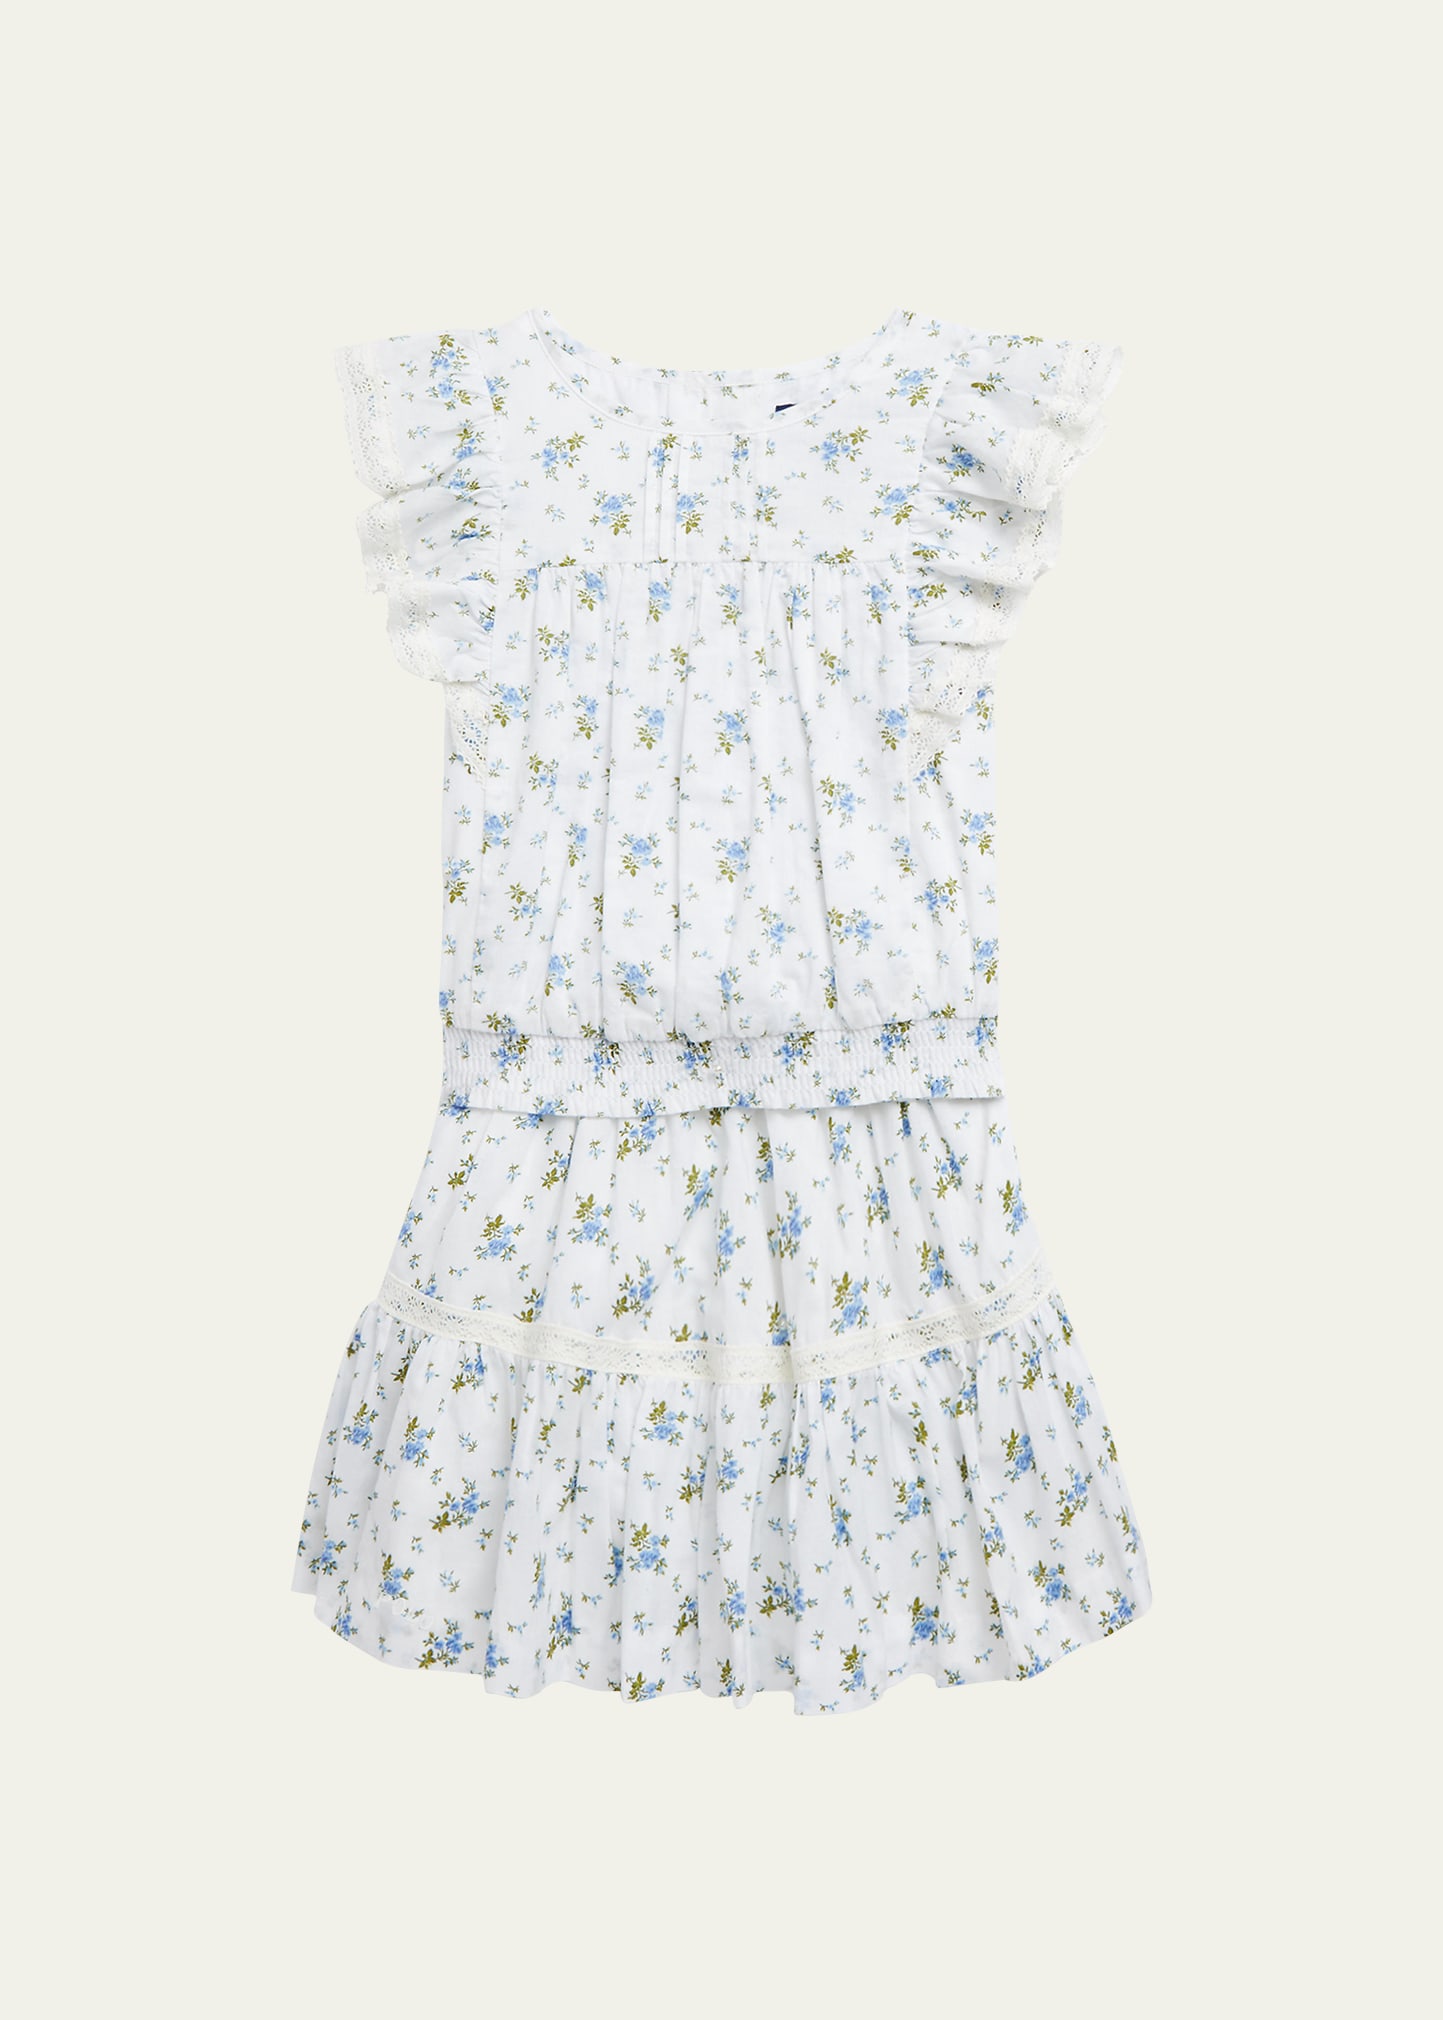 Ralph Lauren Childrenswear Girl's Floral-Print Lace Trim Top & Skirt Set,  Size 7-16